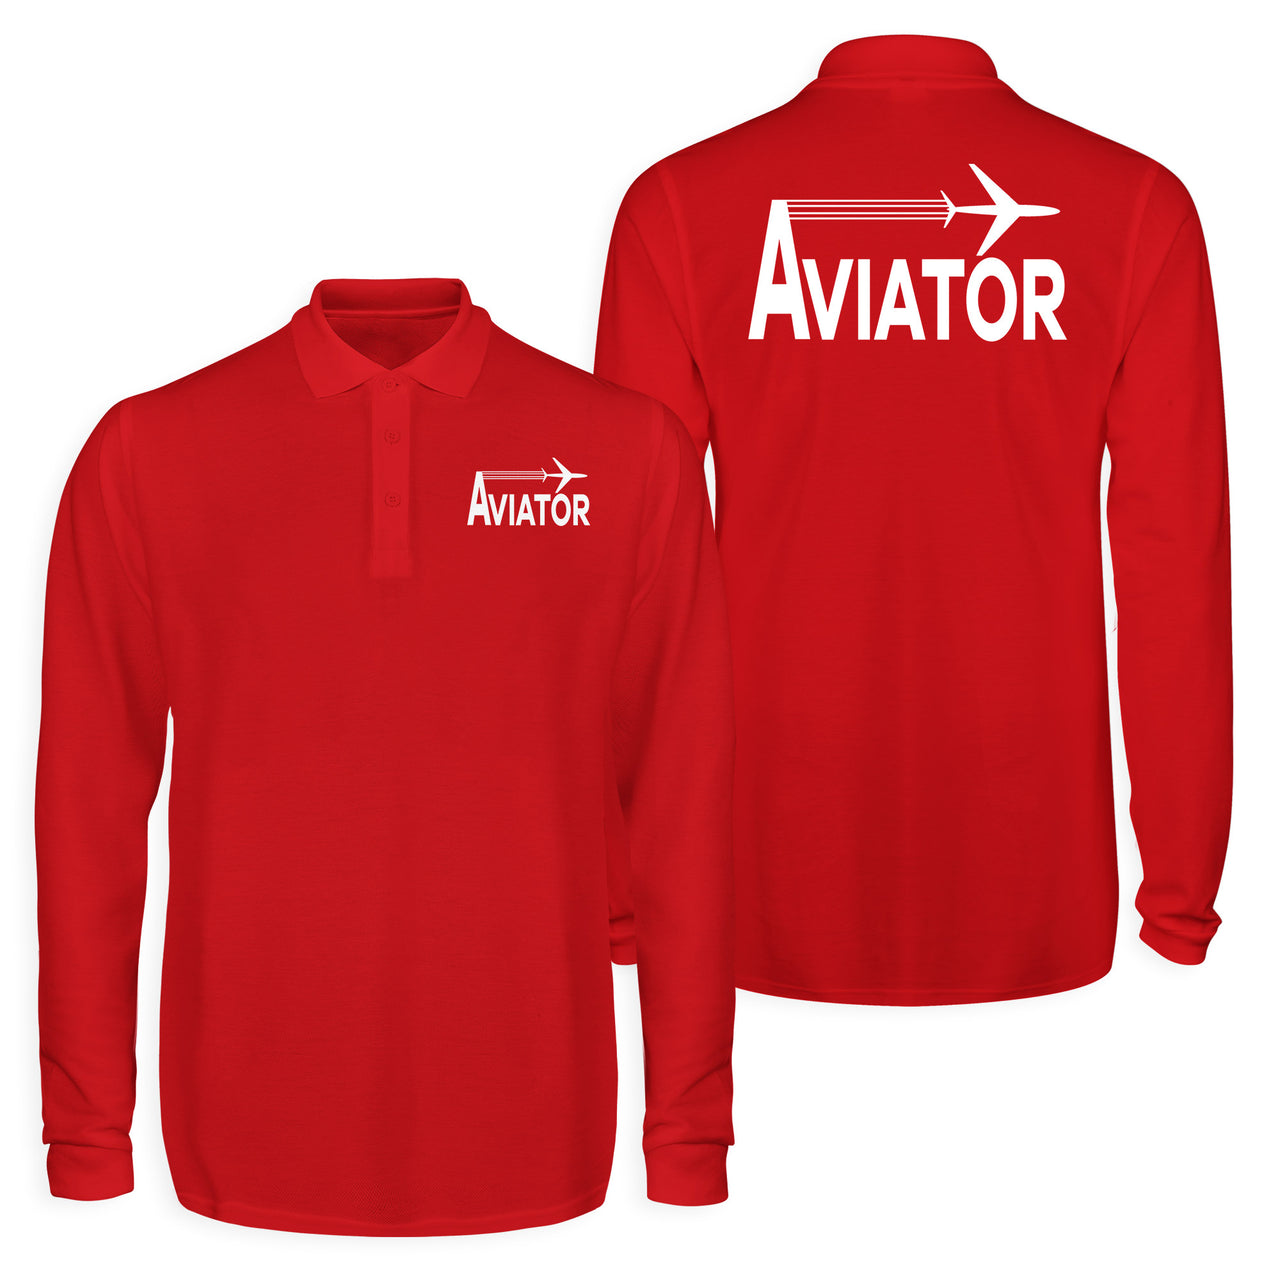 Aviator Designed Long Sleeve Polo T-Shirts (Double-Side)